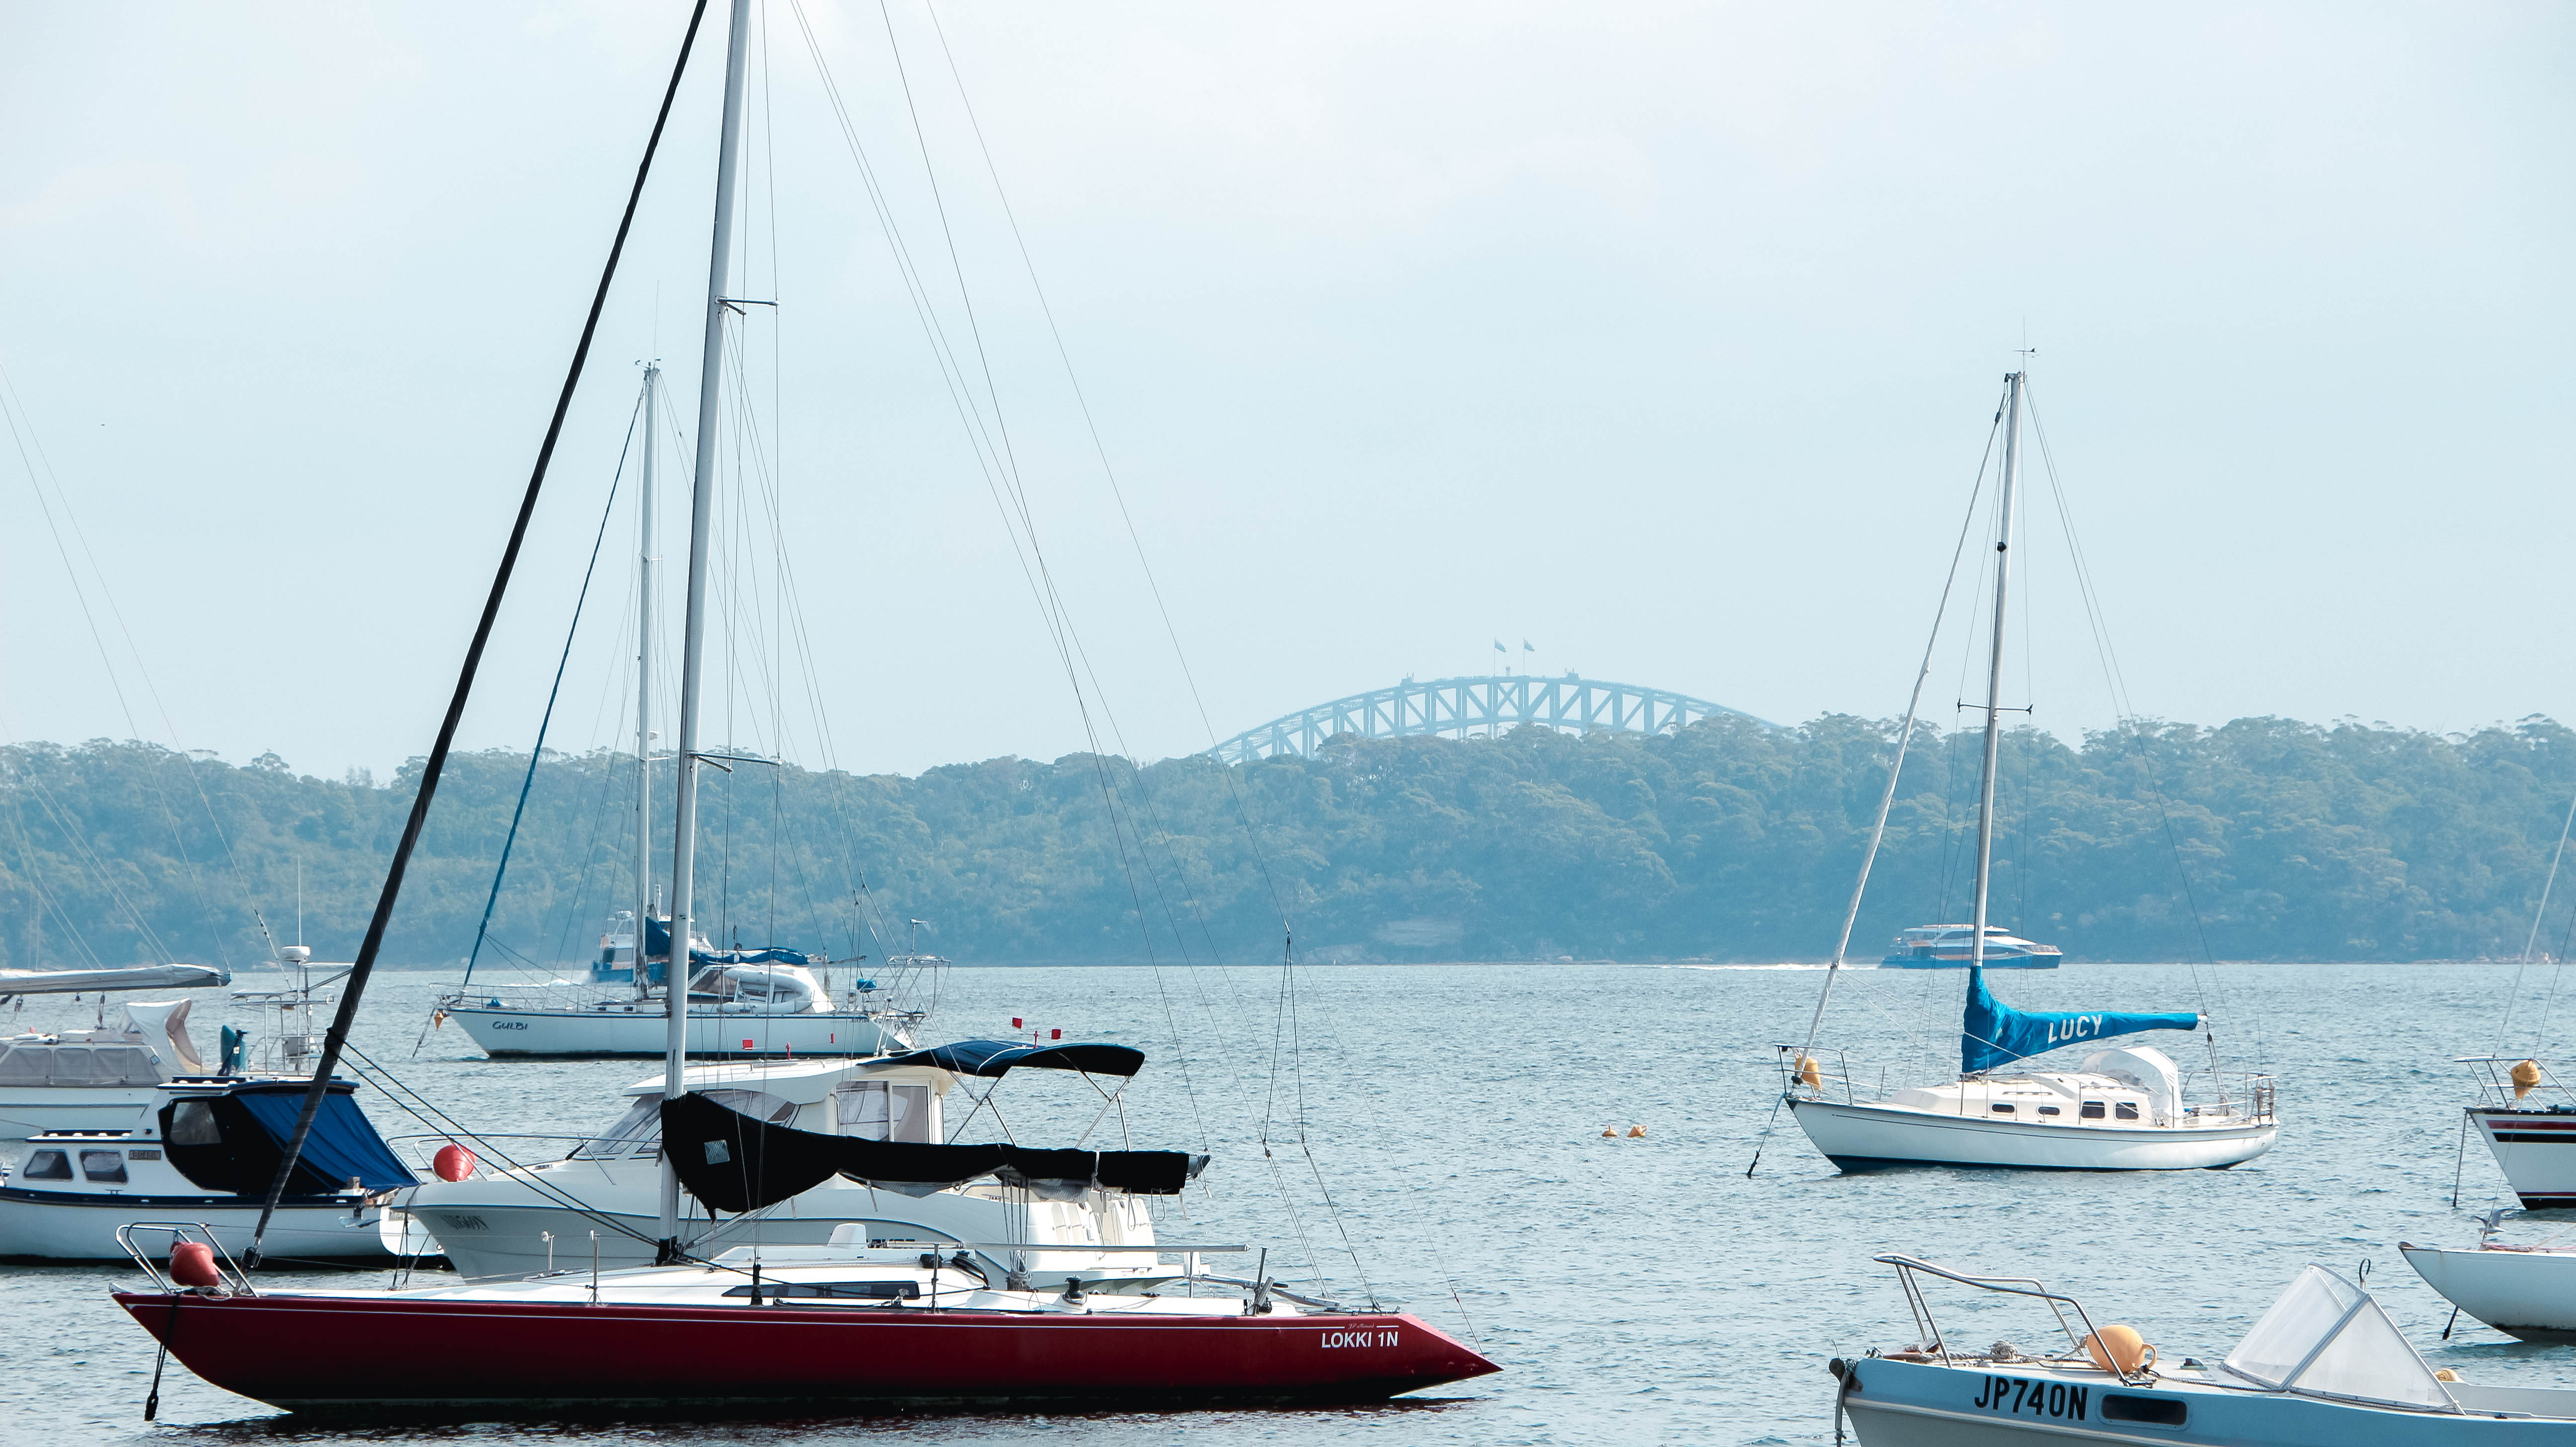 Sydney Harbour Bridge in the distance